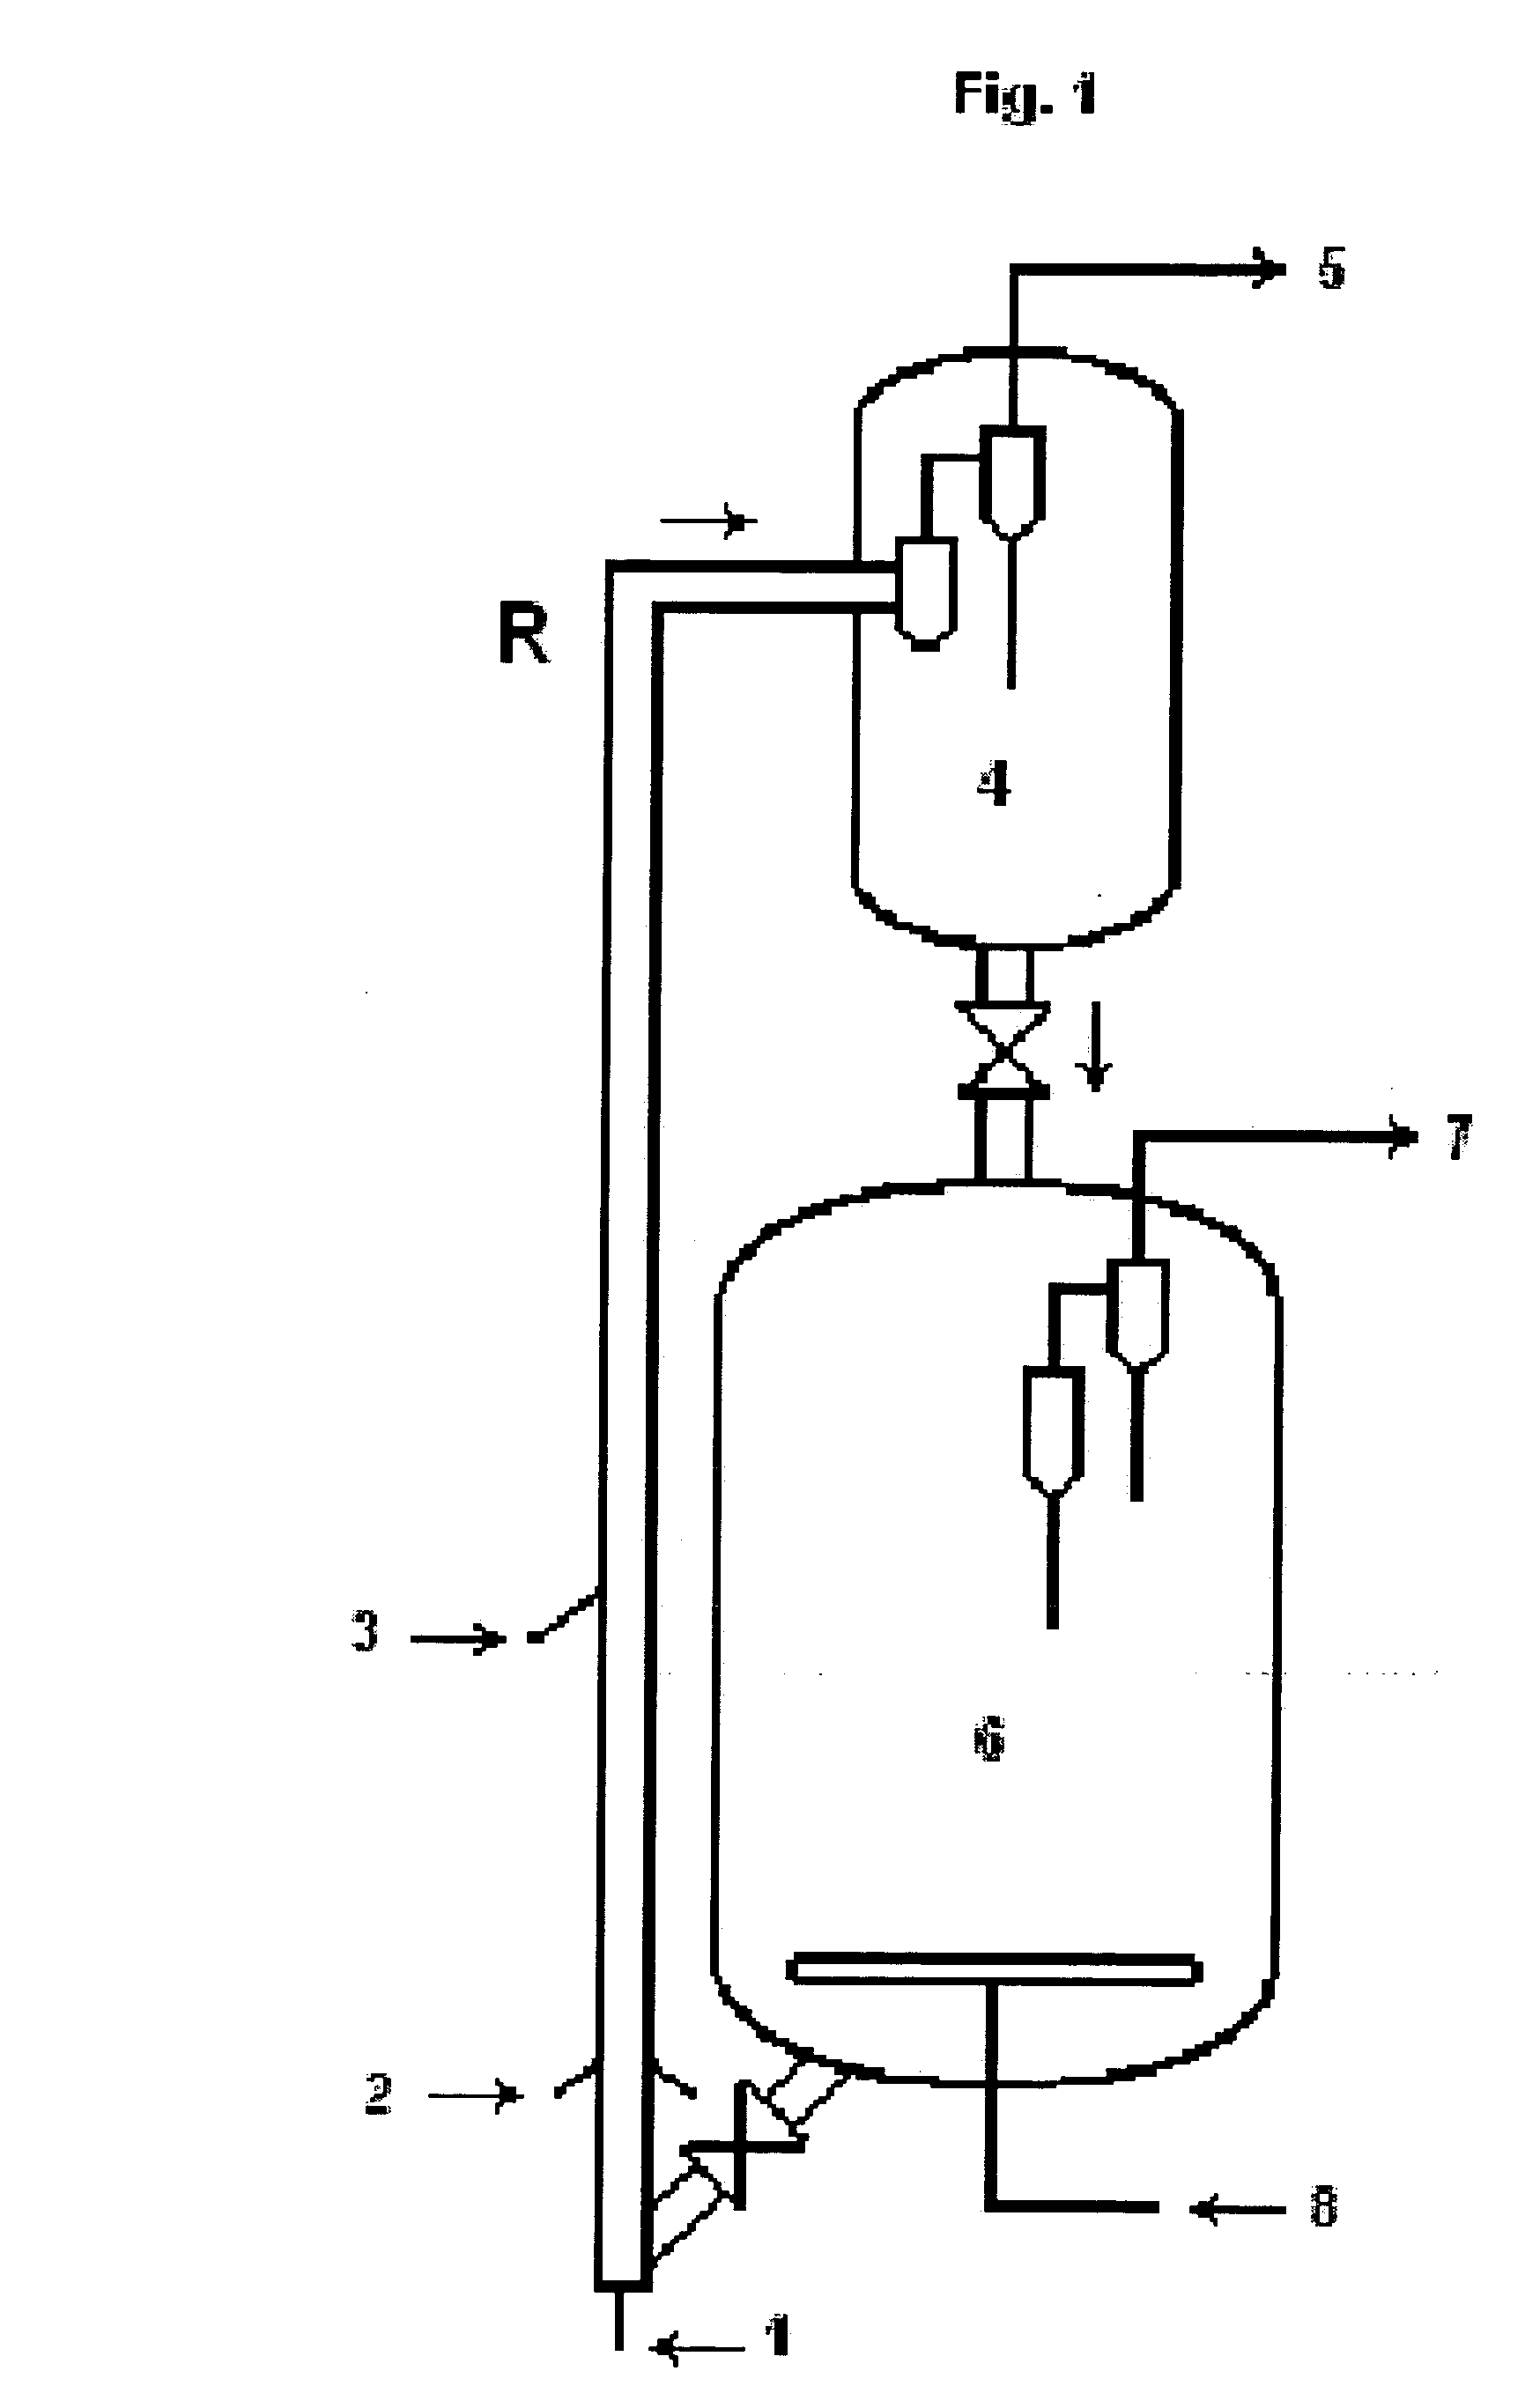 FCC process for the maximization of medium distillates